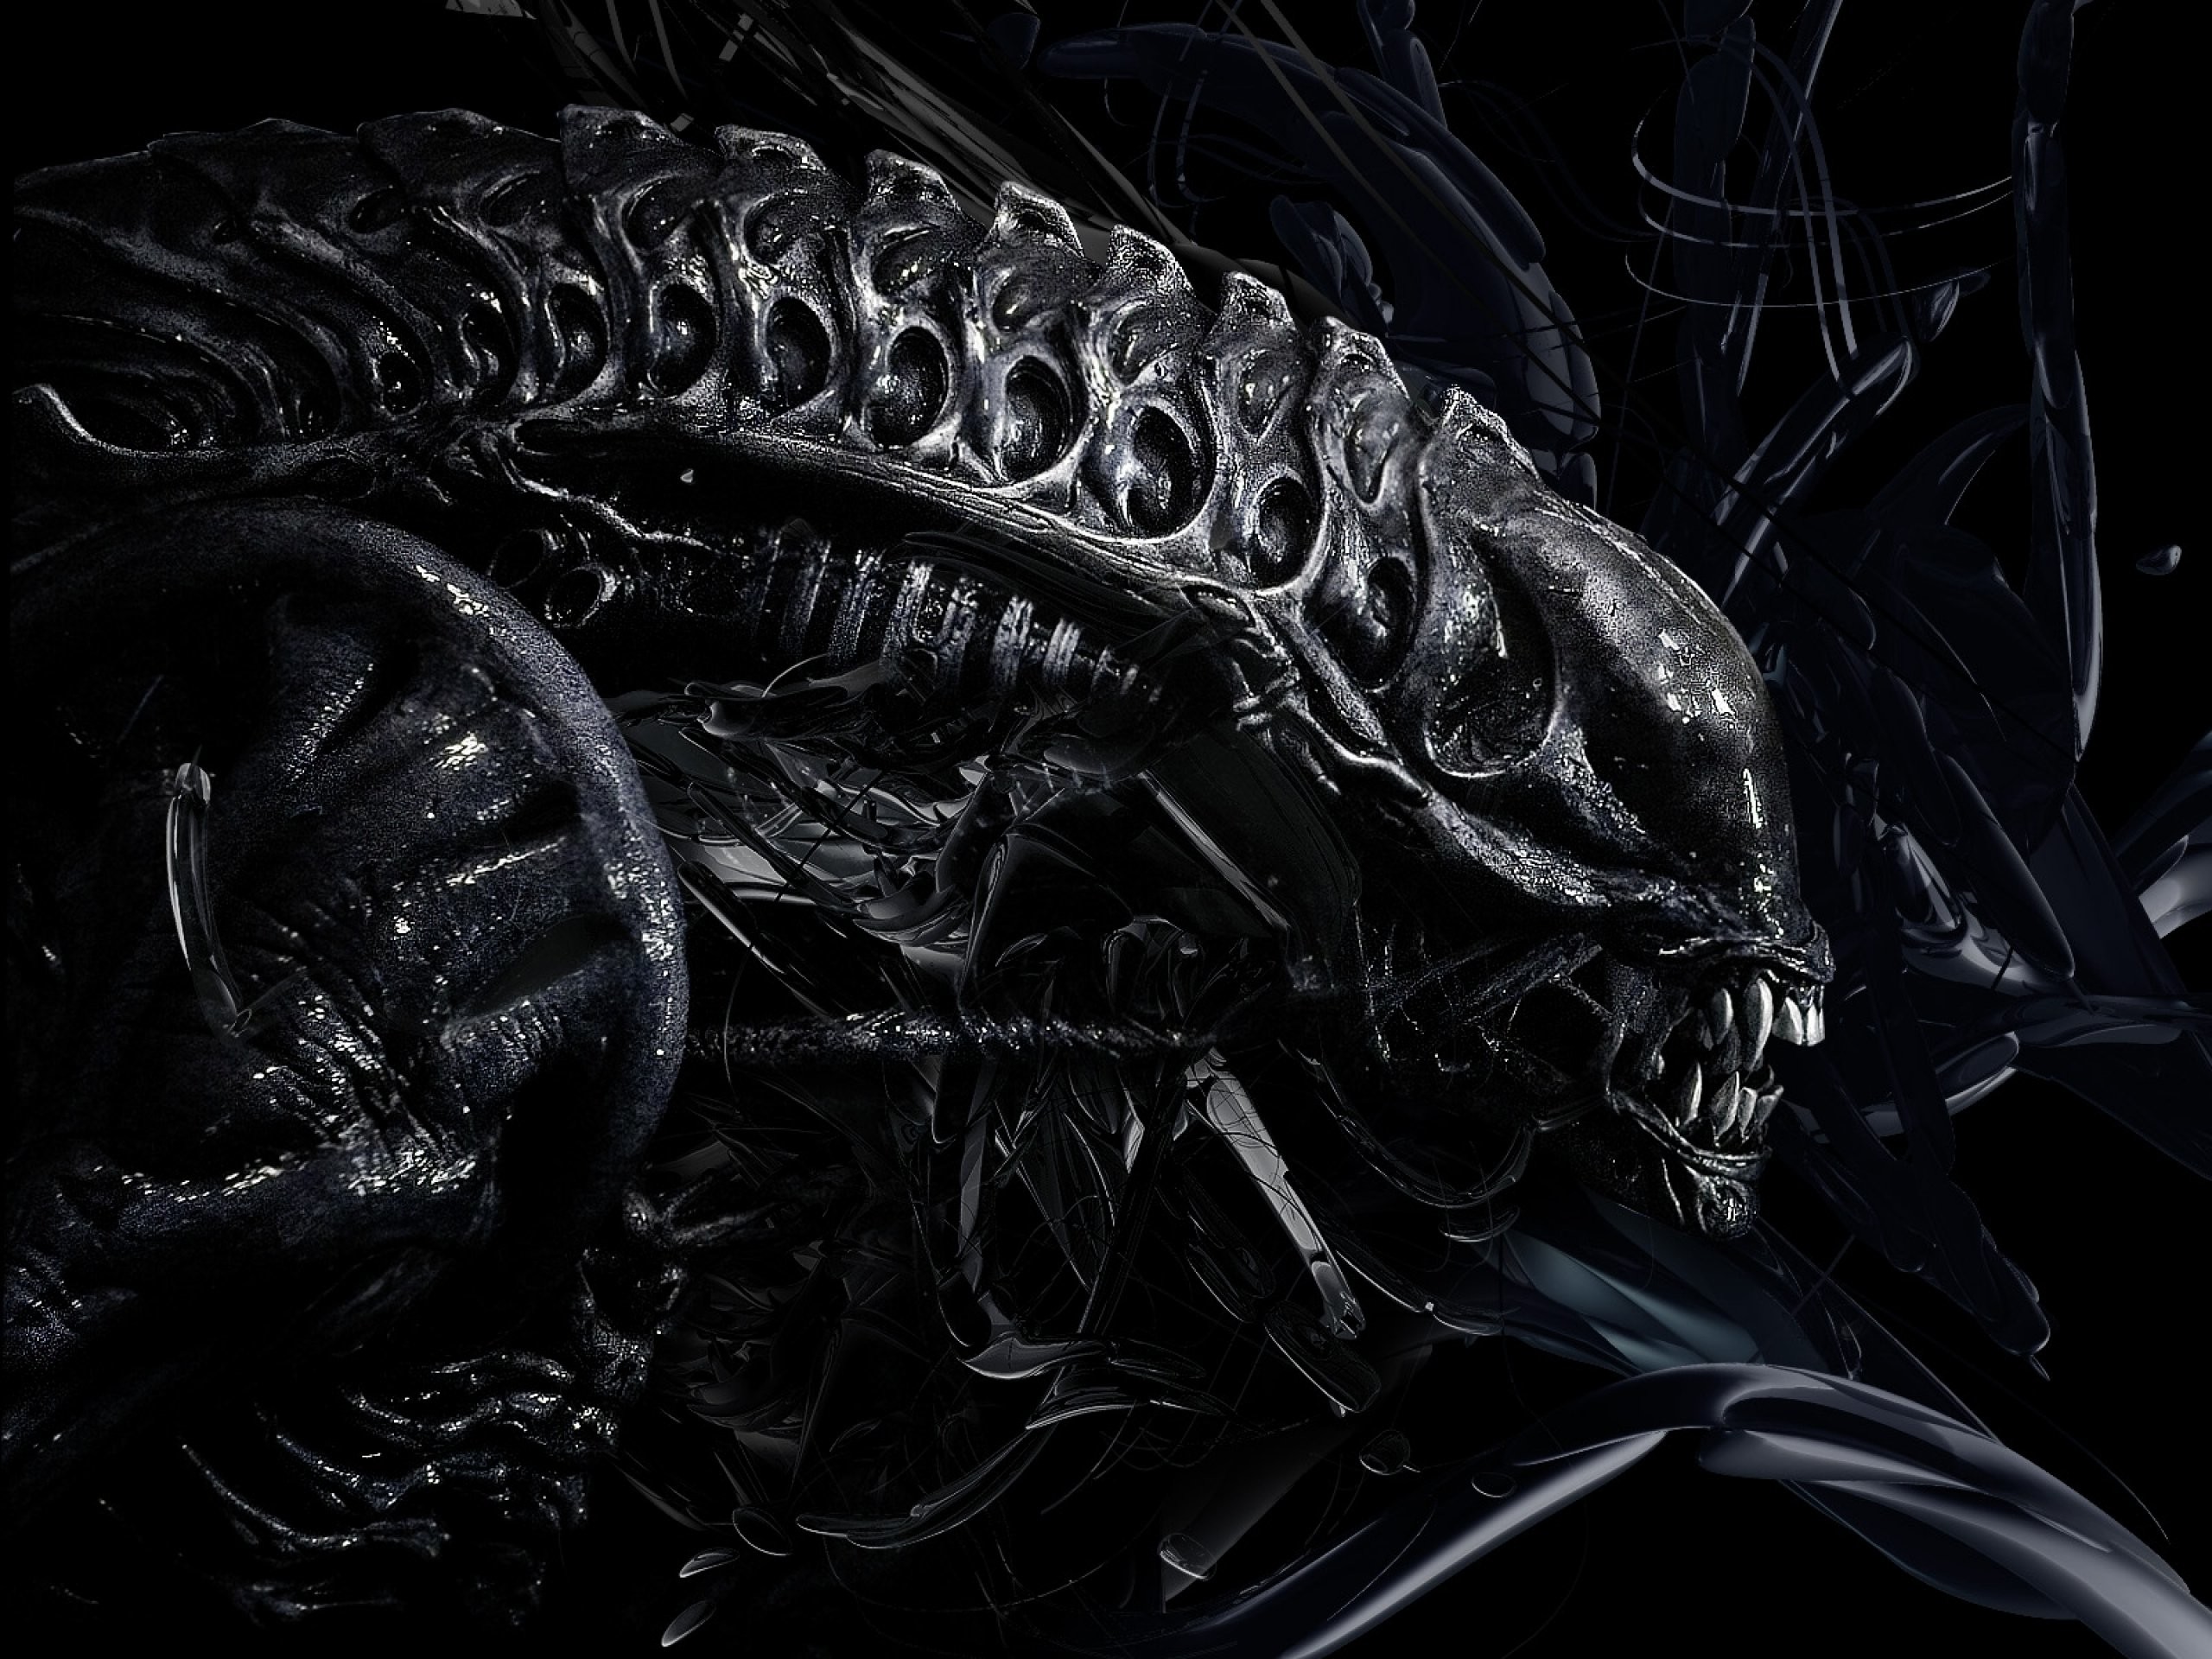 H R GIGER art artwork dark evil artistic horror fantasy sci fi alien aliens xenomorph wallpaper 695681 WallpaperUP